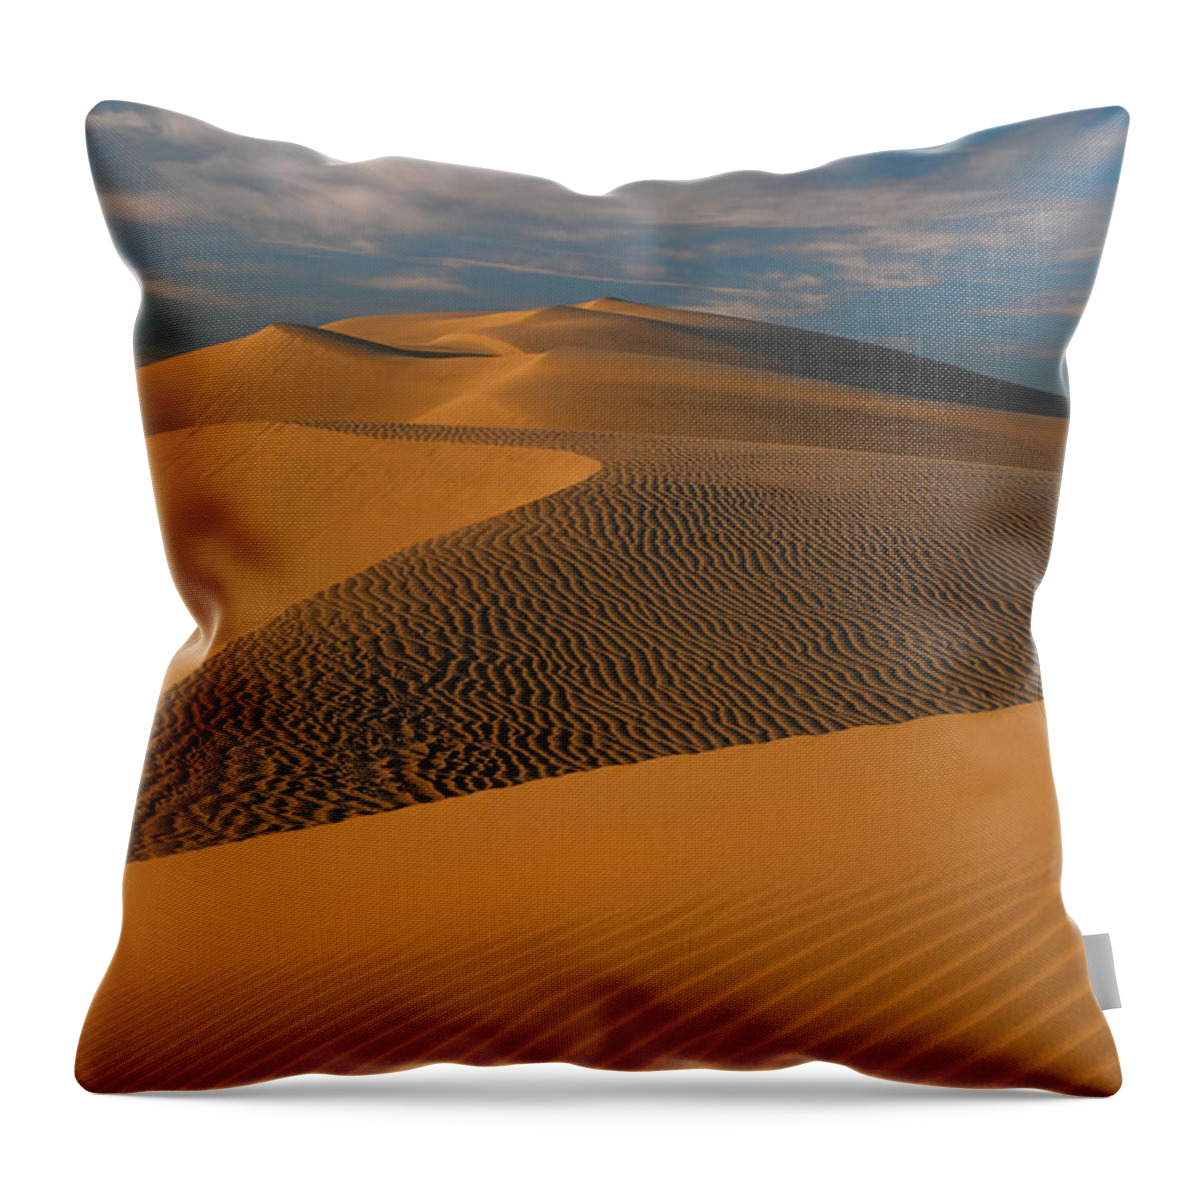 Jeff Foott Throw Pillow featuring the photograph Mojave Desert Sand Dune by Jeff Foott